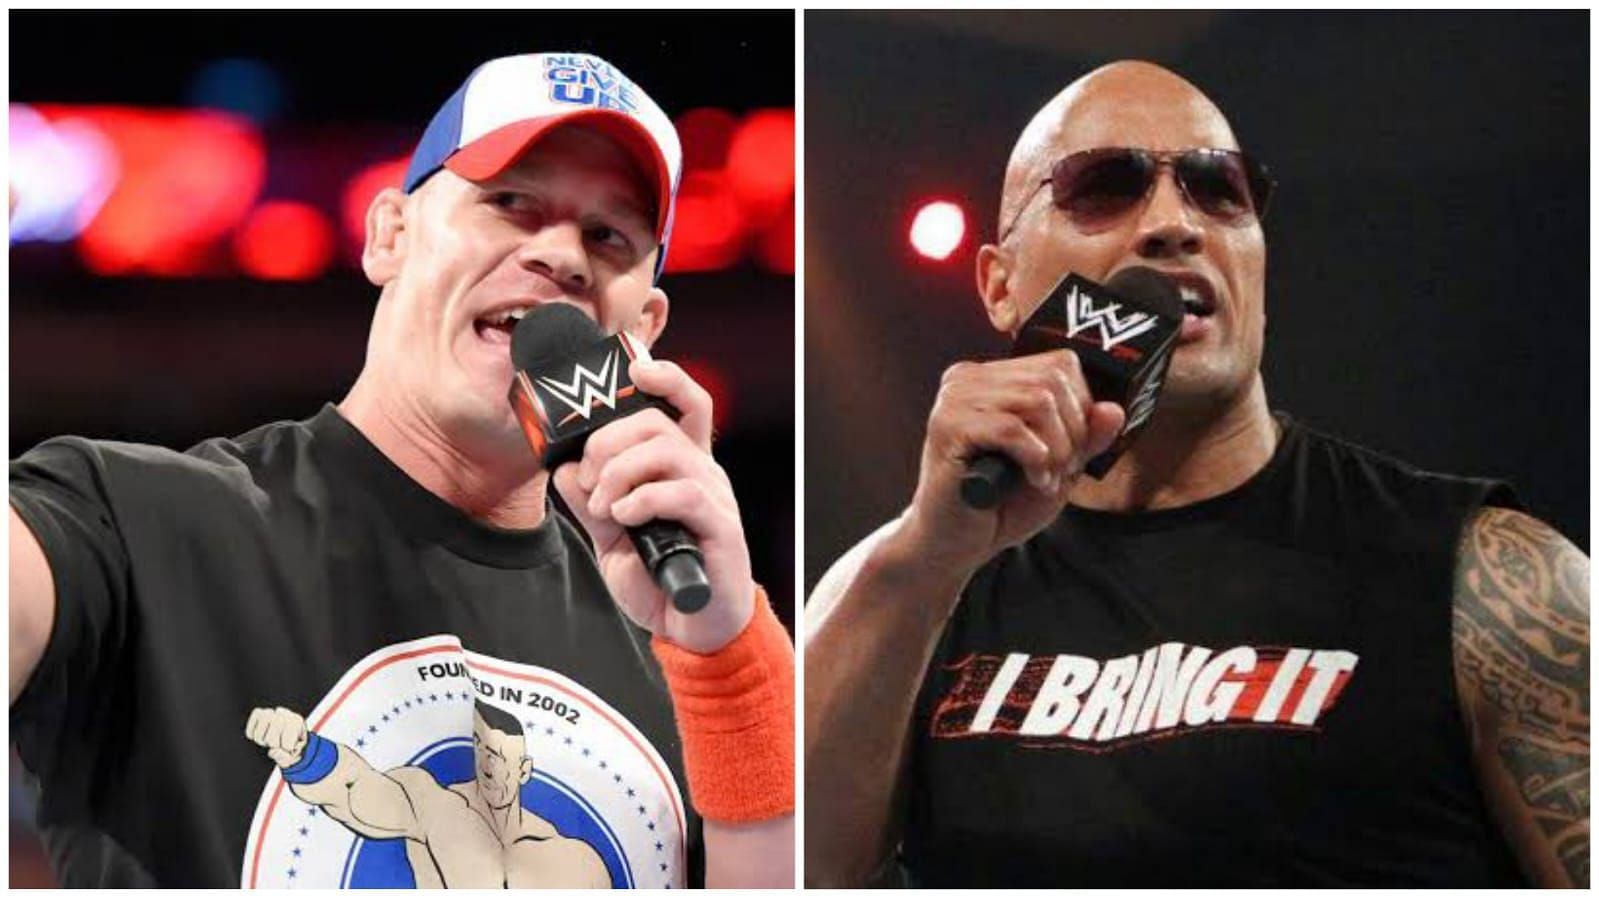 WWE megastars the Rock and John Cena have different promo skills